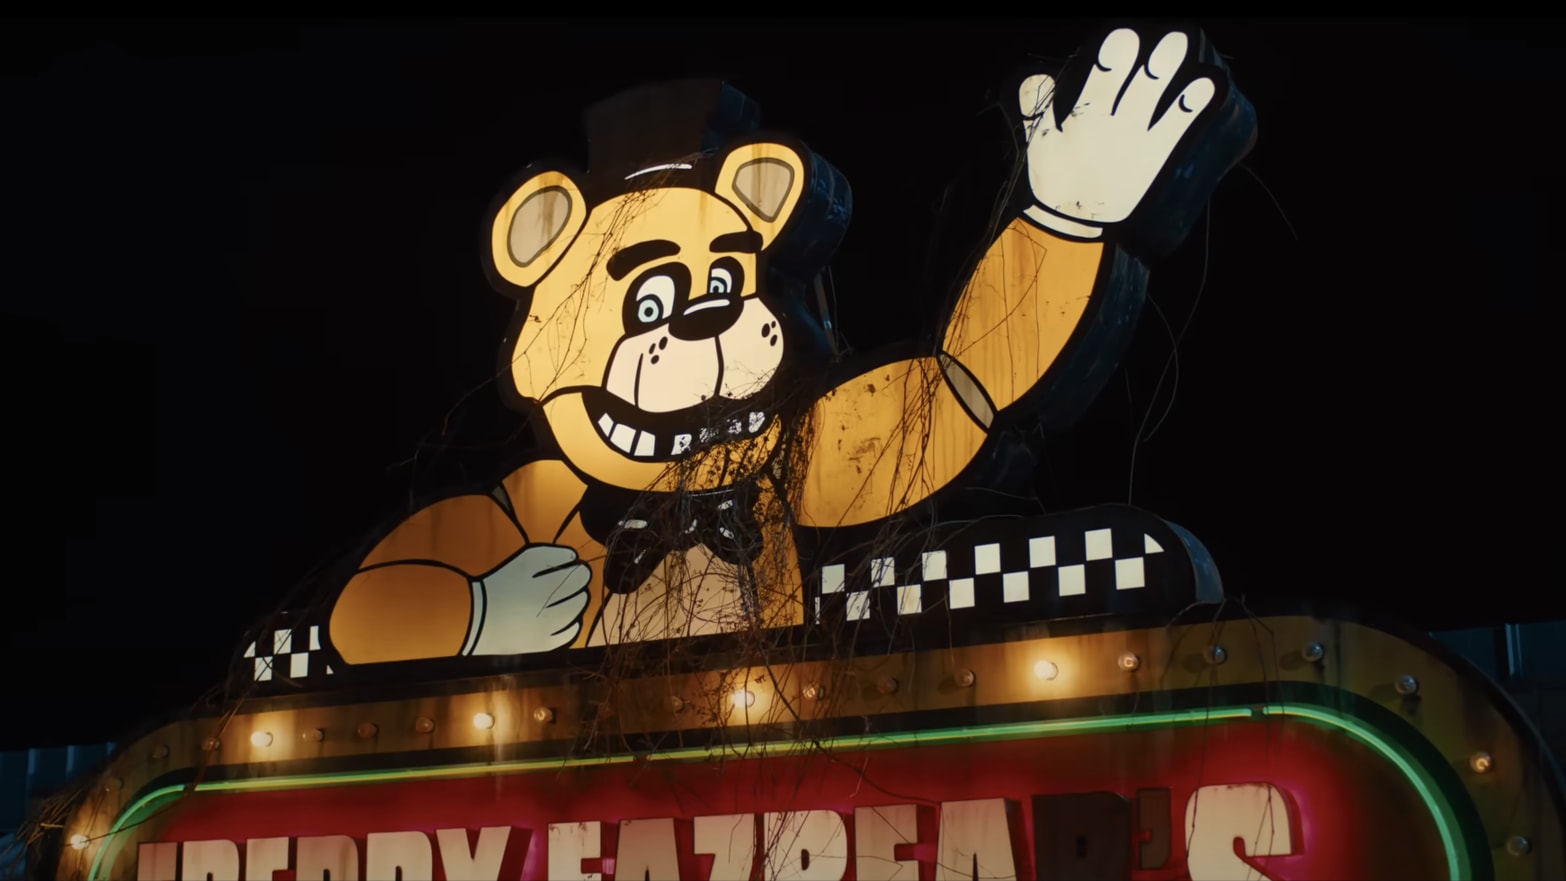 GOLDEN FREDDY PLAYS: Five Nights at Freddy's (Night 5) 